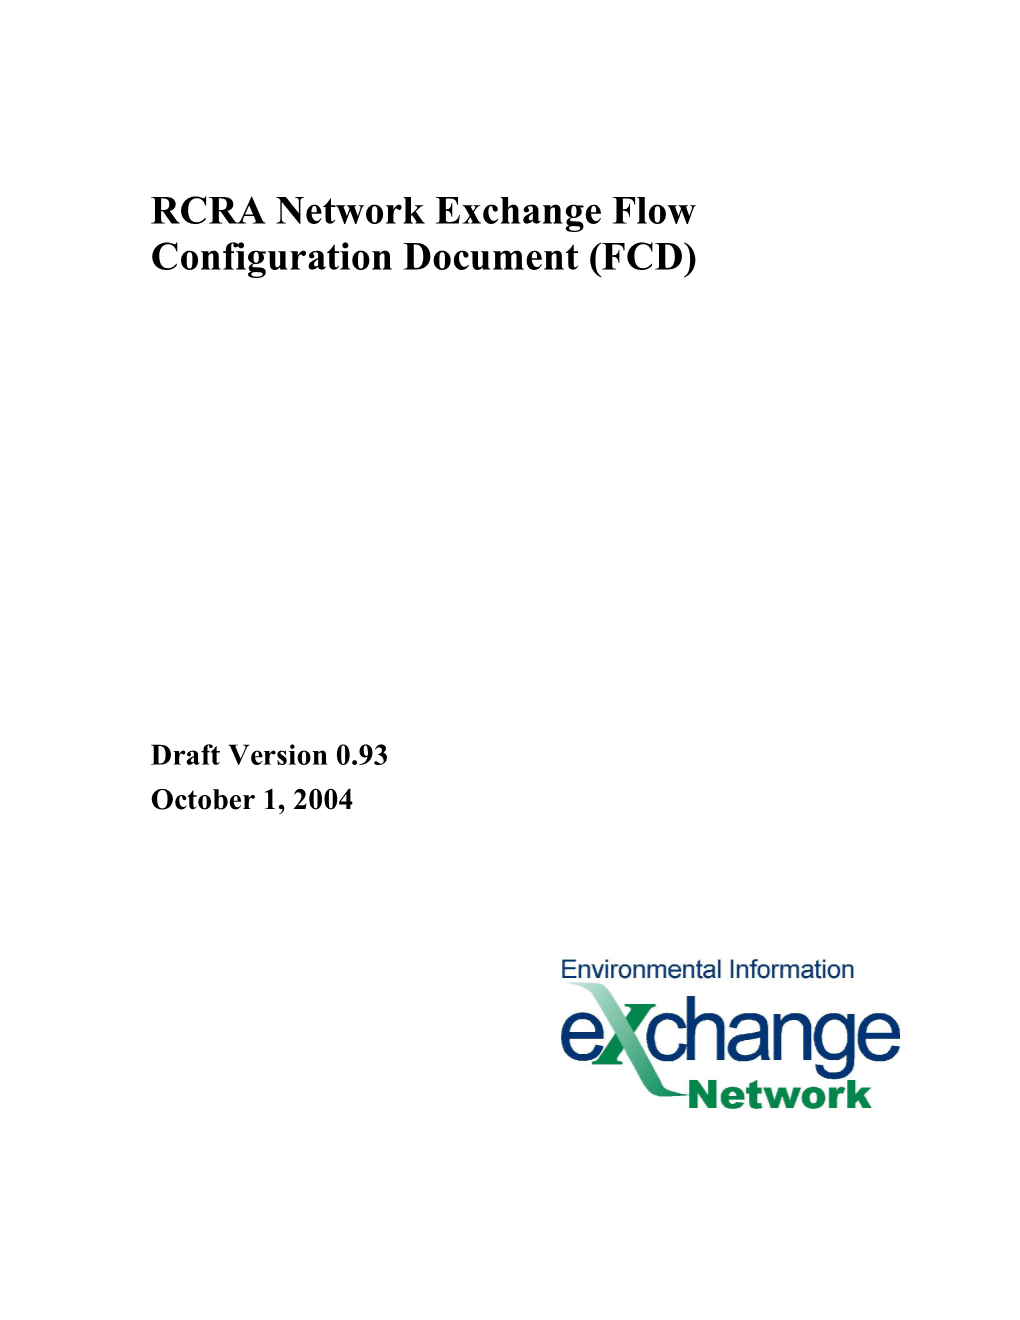 RCRA Network Exchange Flow Configuration Document (FCD)